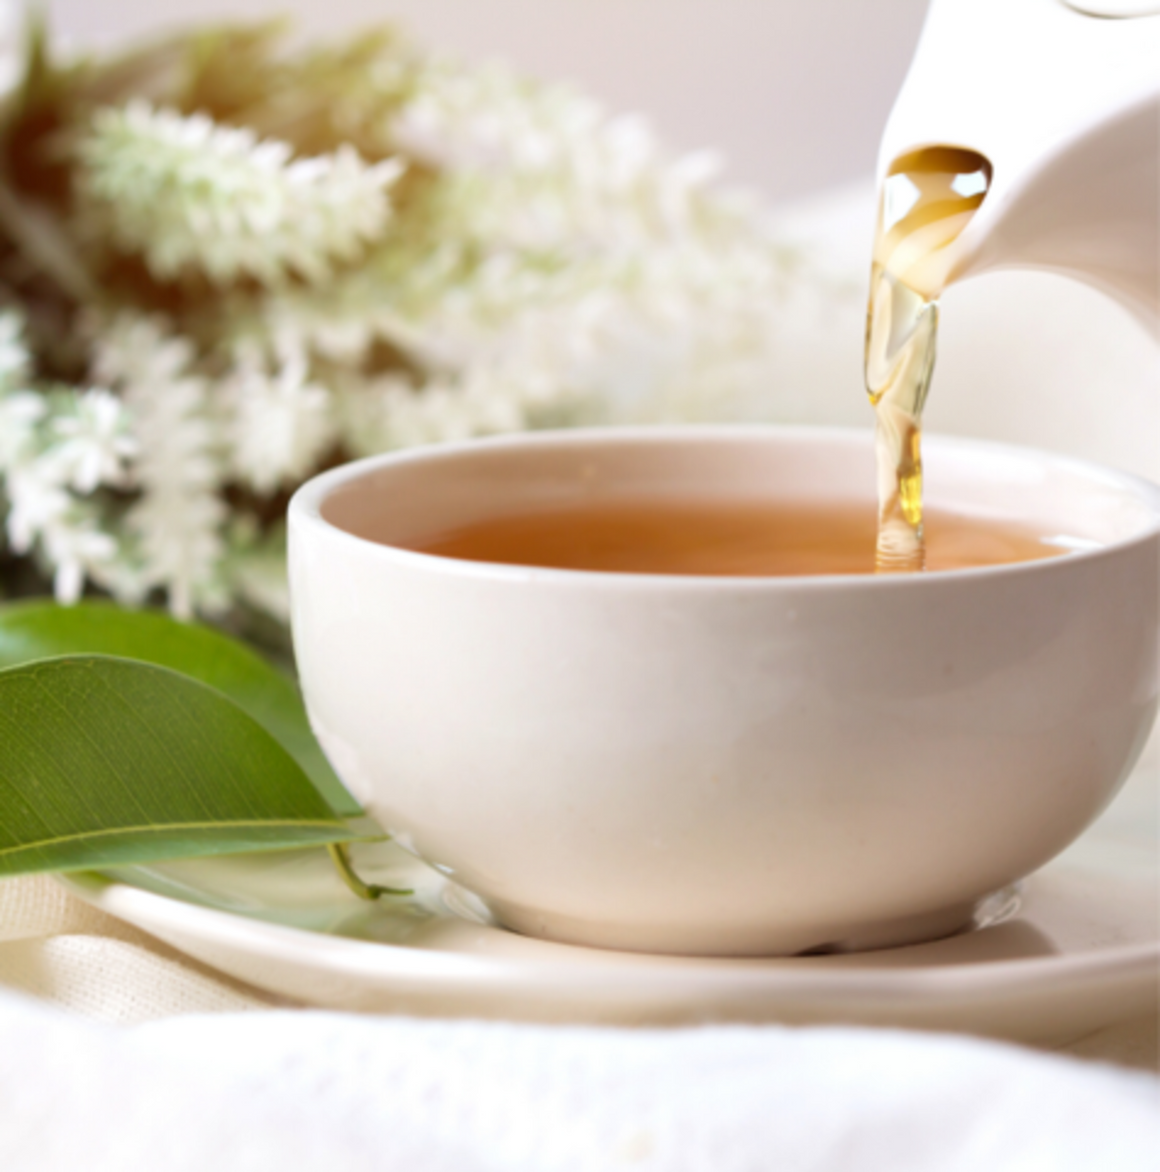 Tega Organic Tea - Chamomile Citrus Herbal Tea, 16 Count